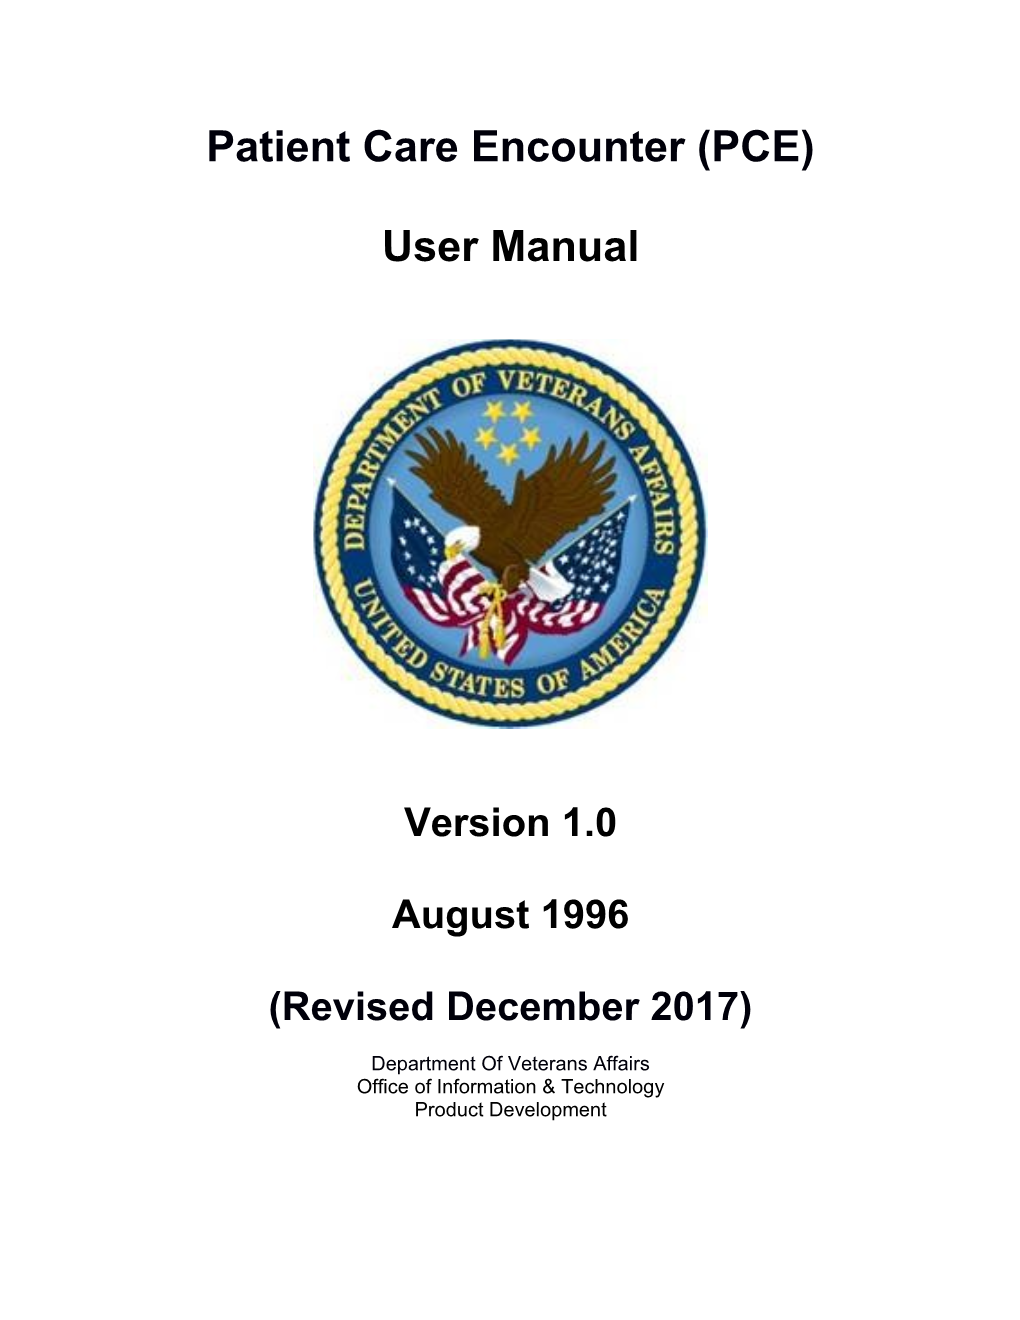 VIMM 2.0 Patient Care Encounter (PCE) Technical Manual